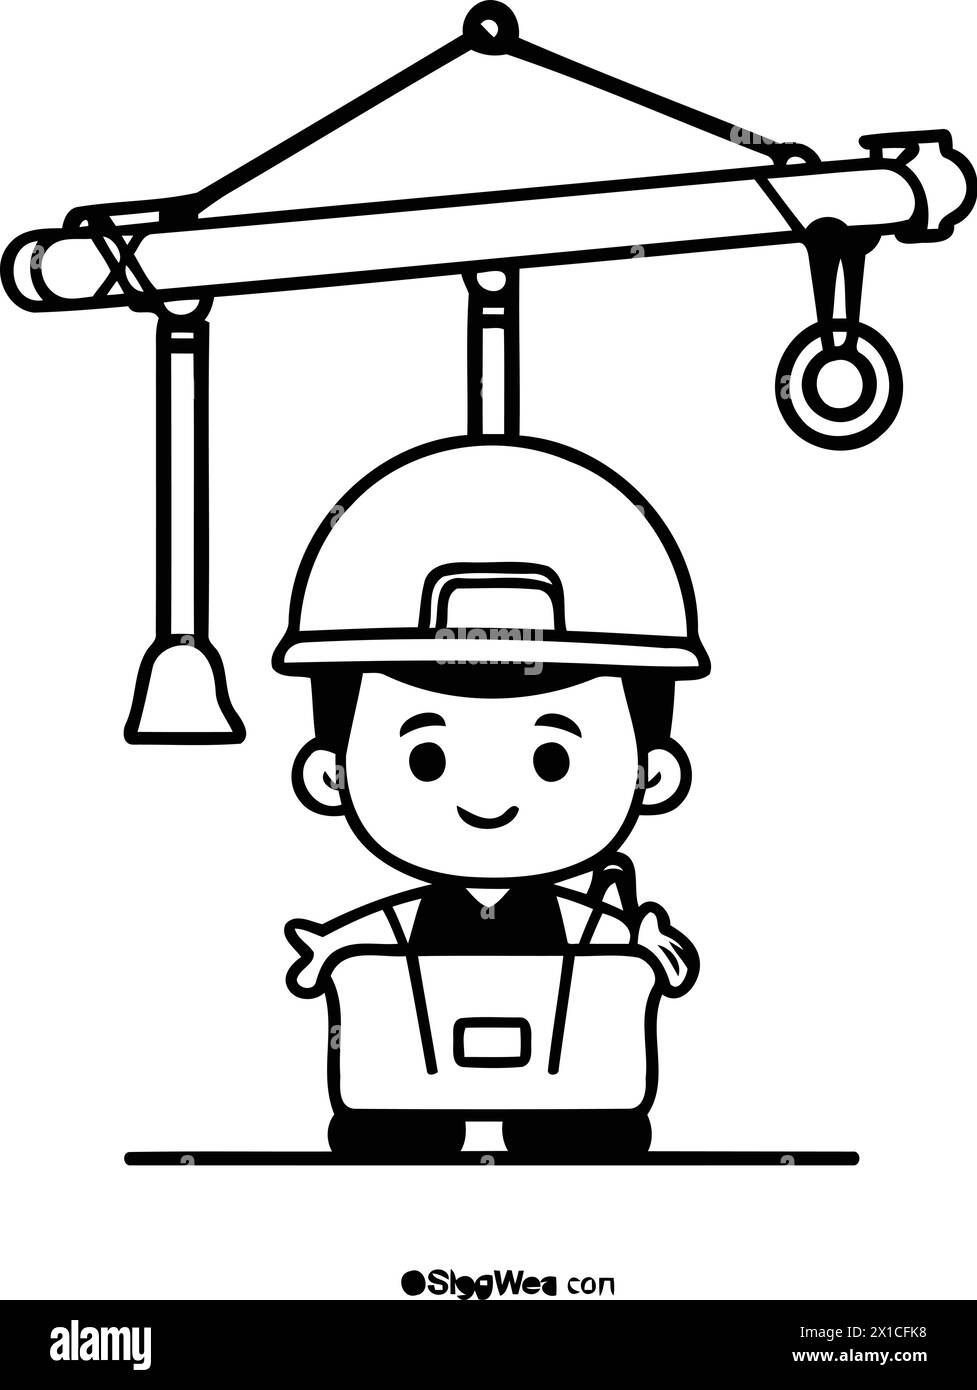 Cartoon construction worker with crane. Vector illustration. Eps 10. Stock Vector